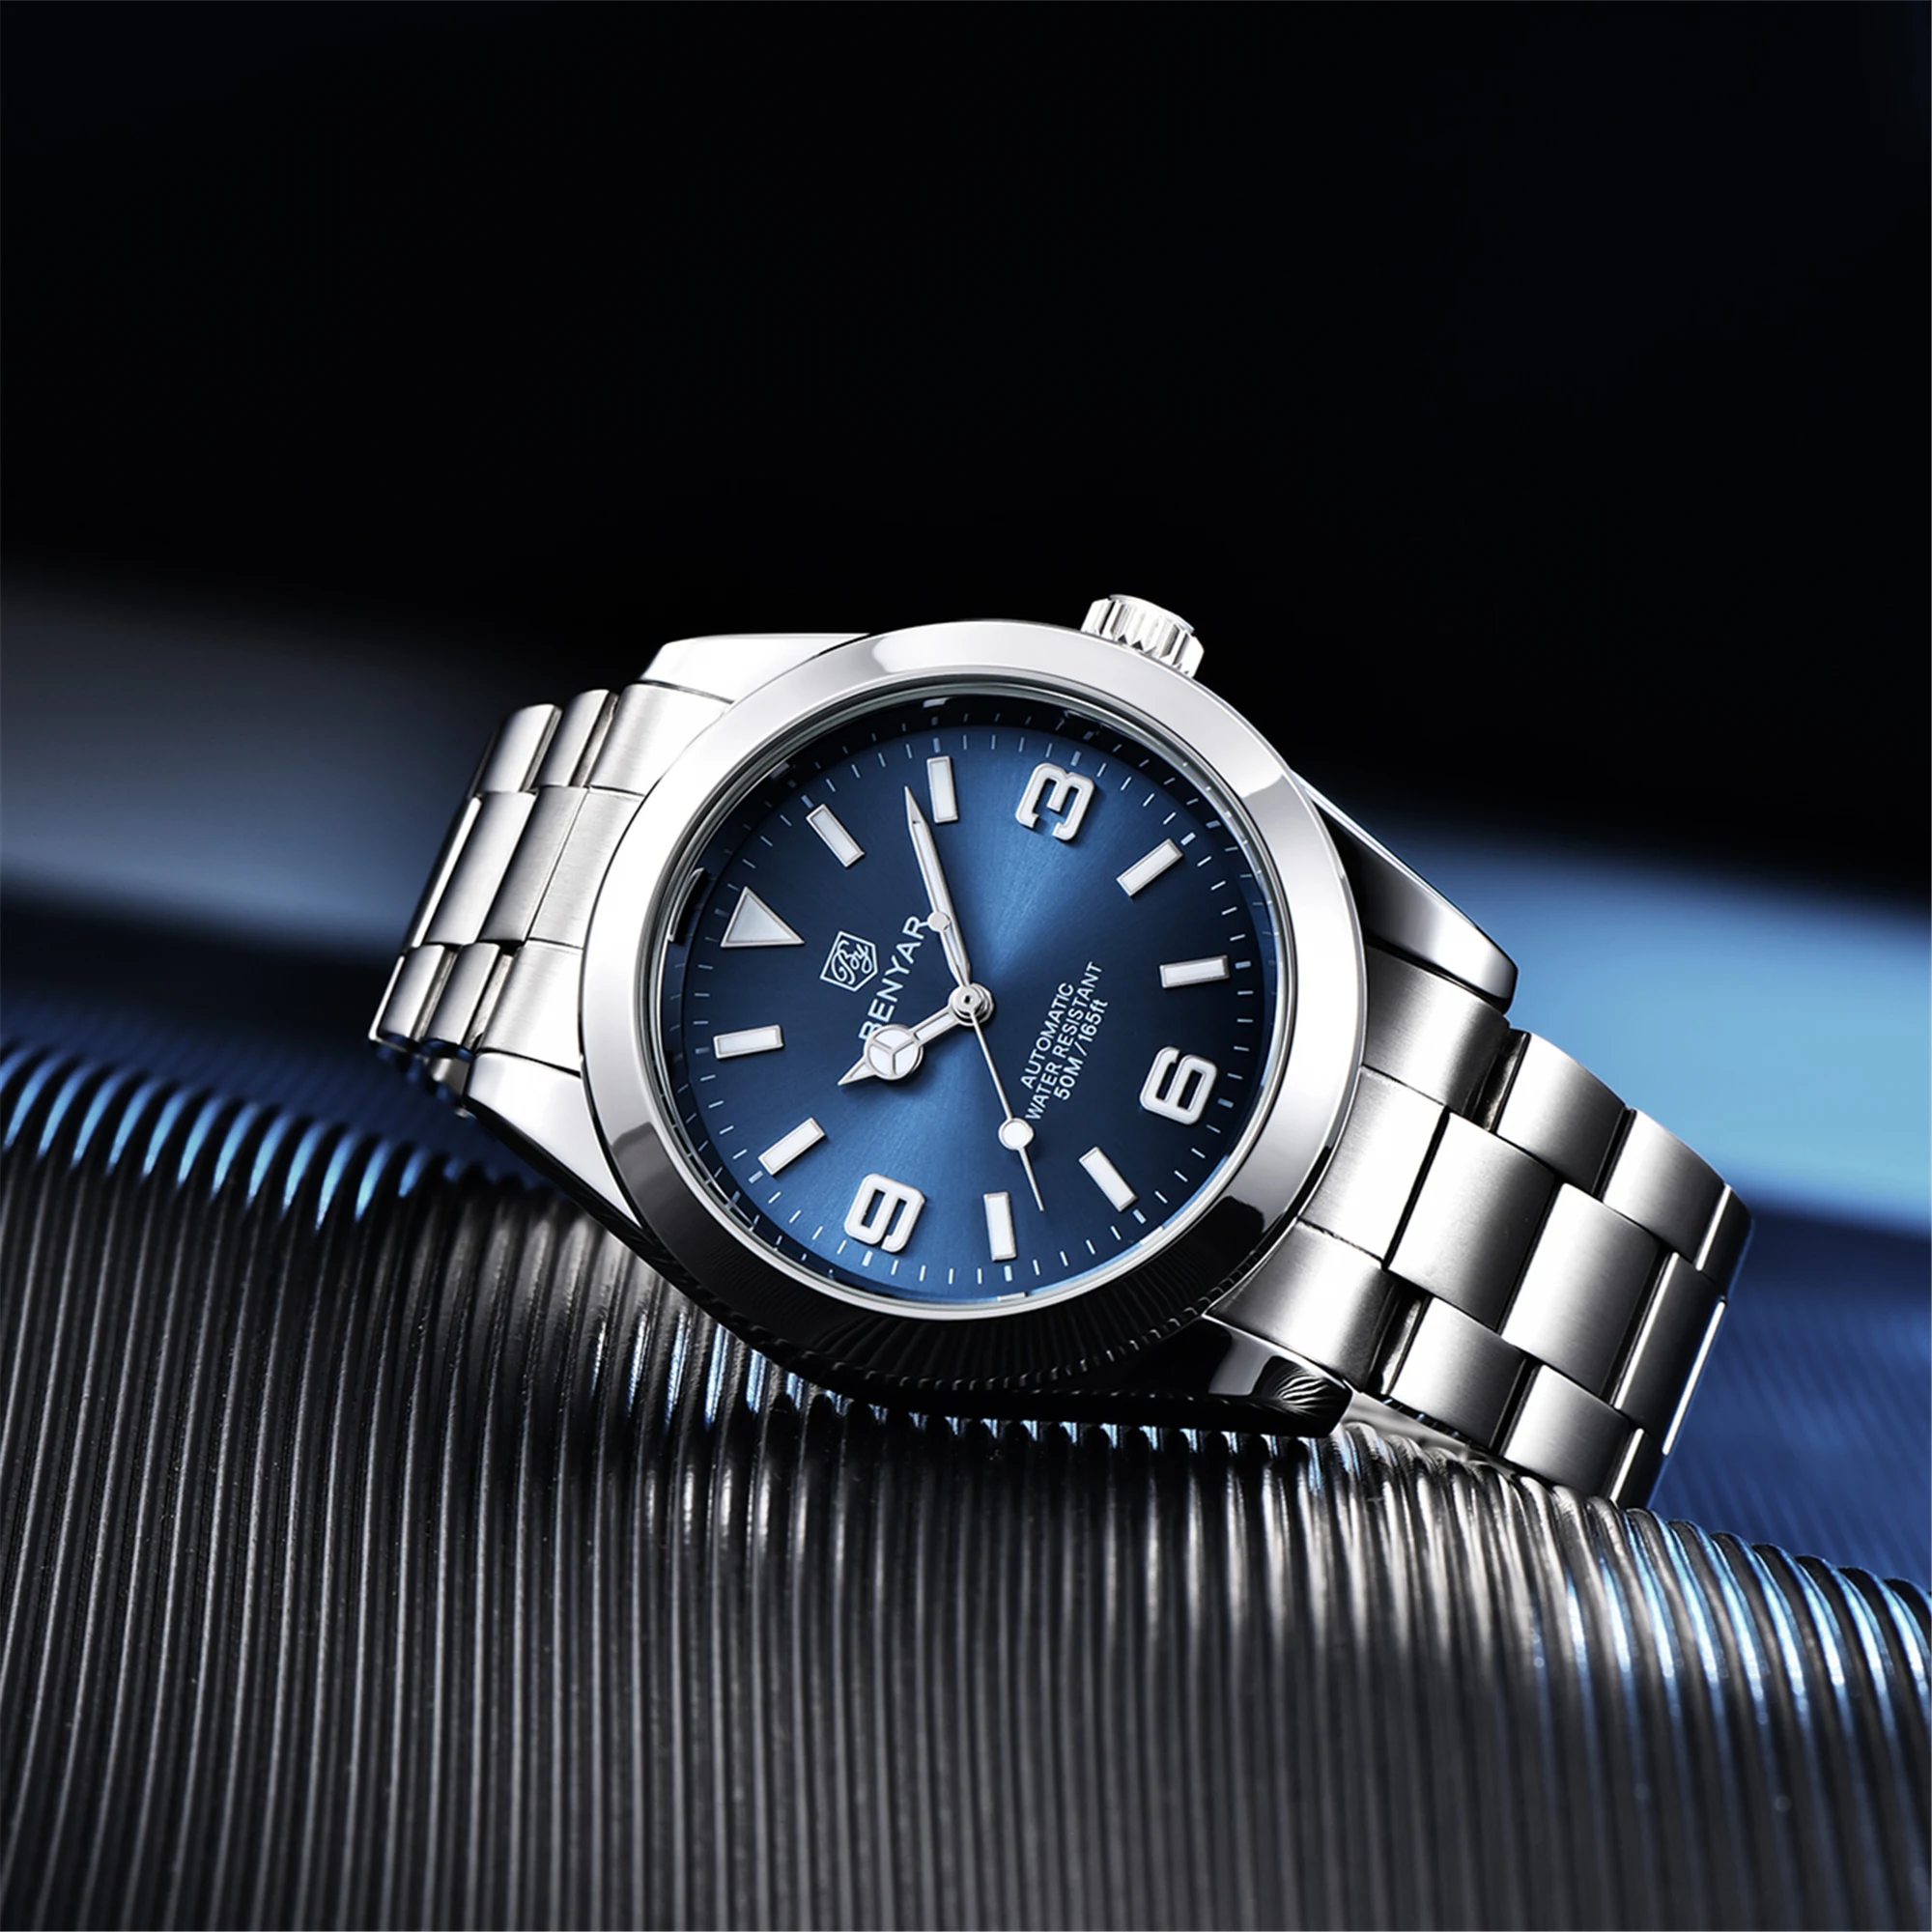 BENYAR New Men's Automatic Mechanical Watch Top Brand Luxury Sports Watch Stainless Steel Waterproof Watch reloj hombre 2020